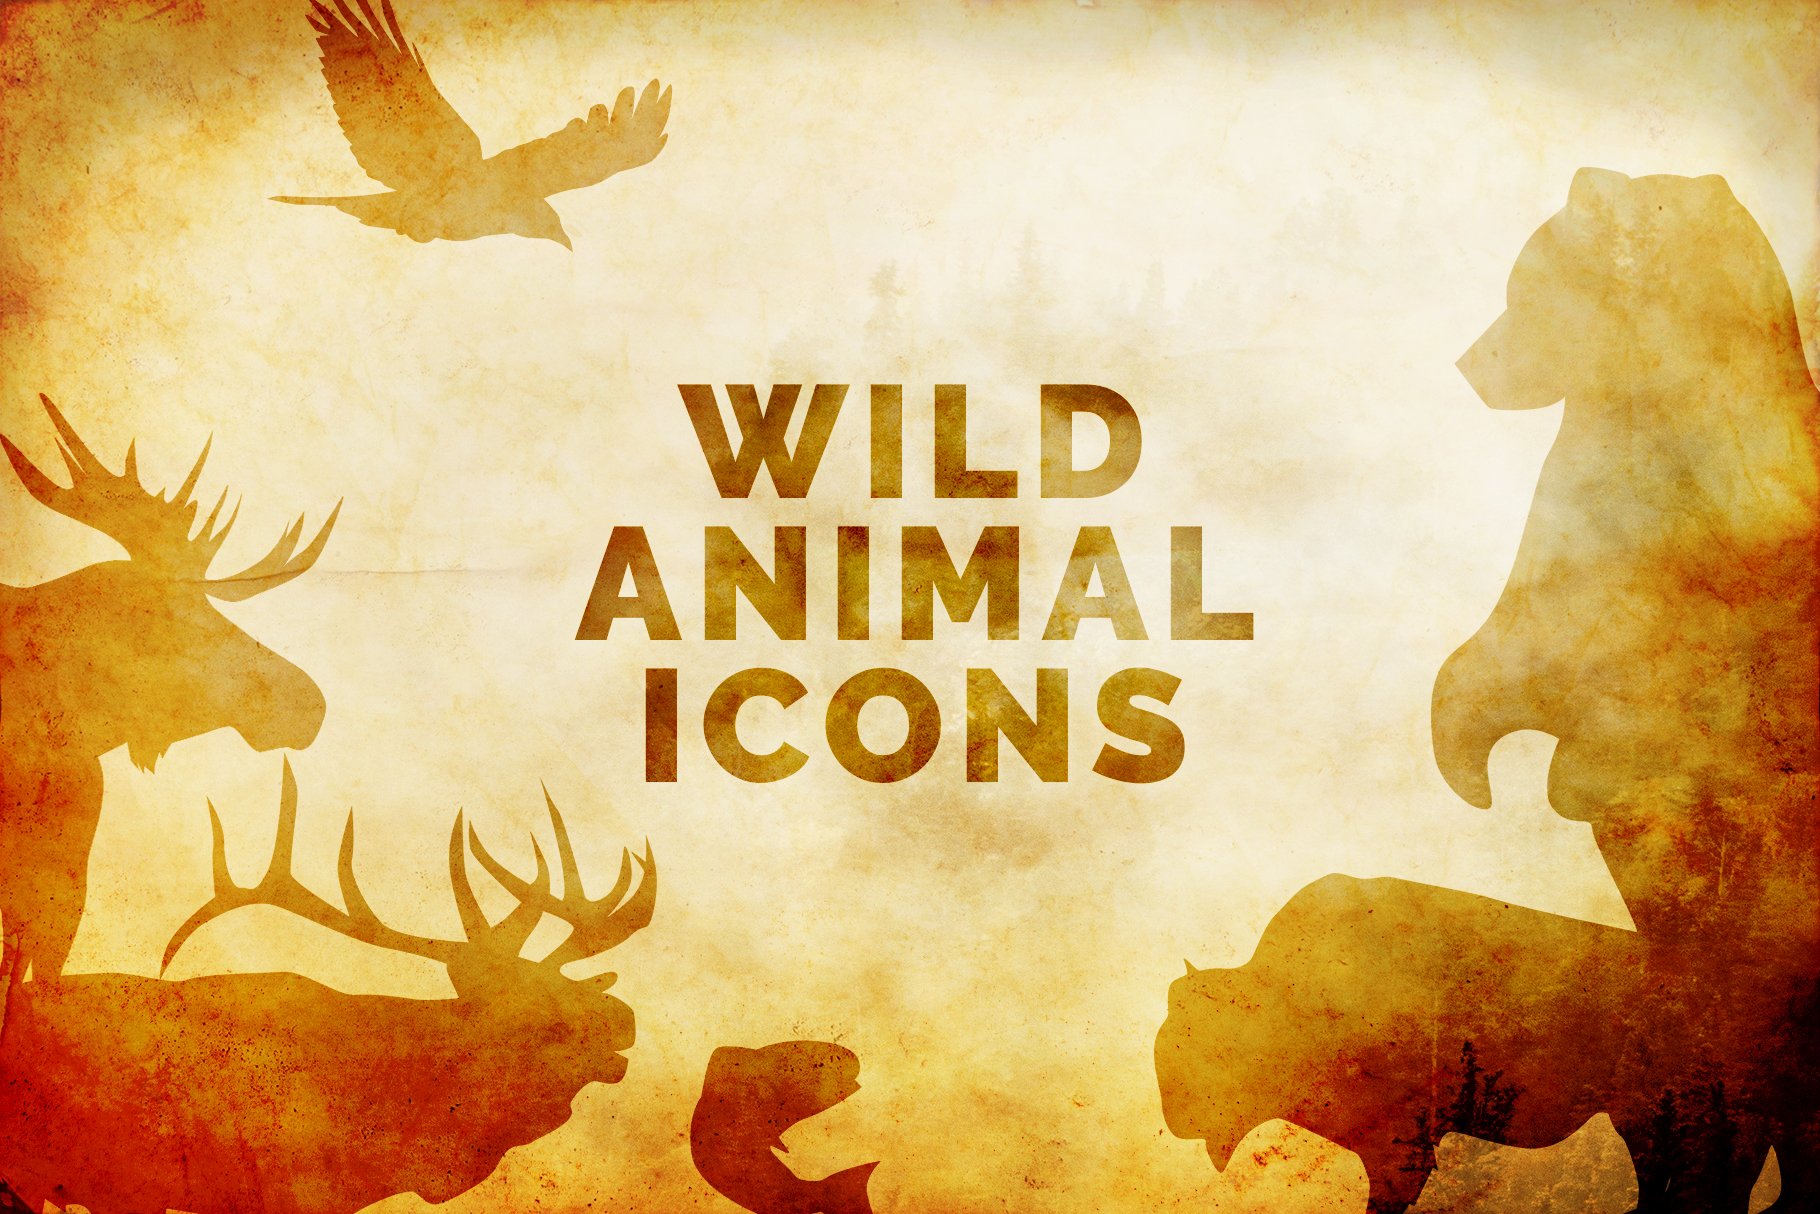 Wild Animals of North America cover image.